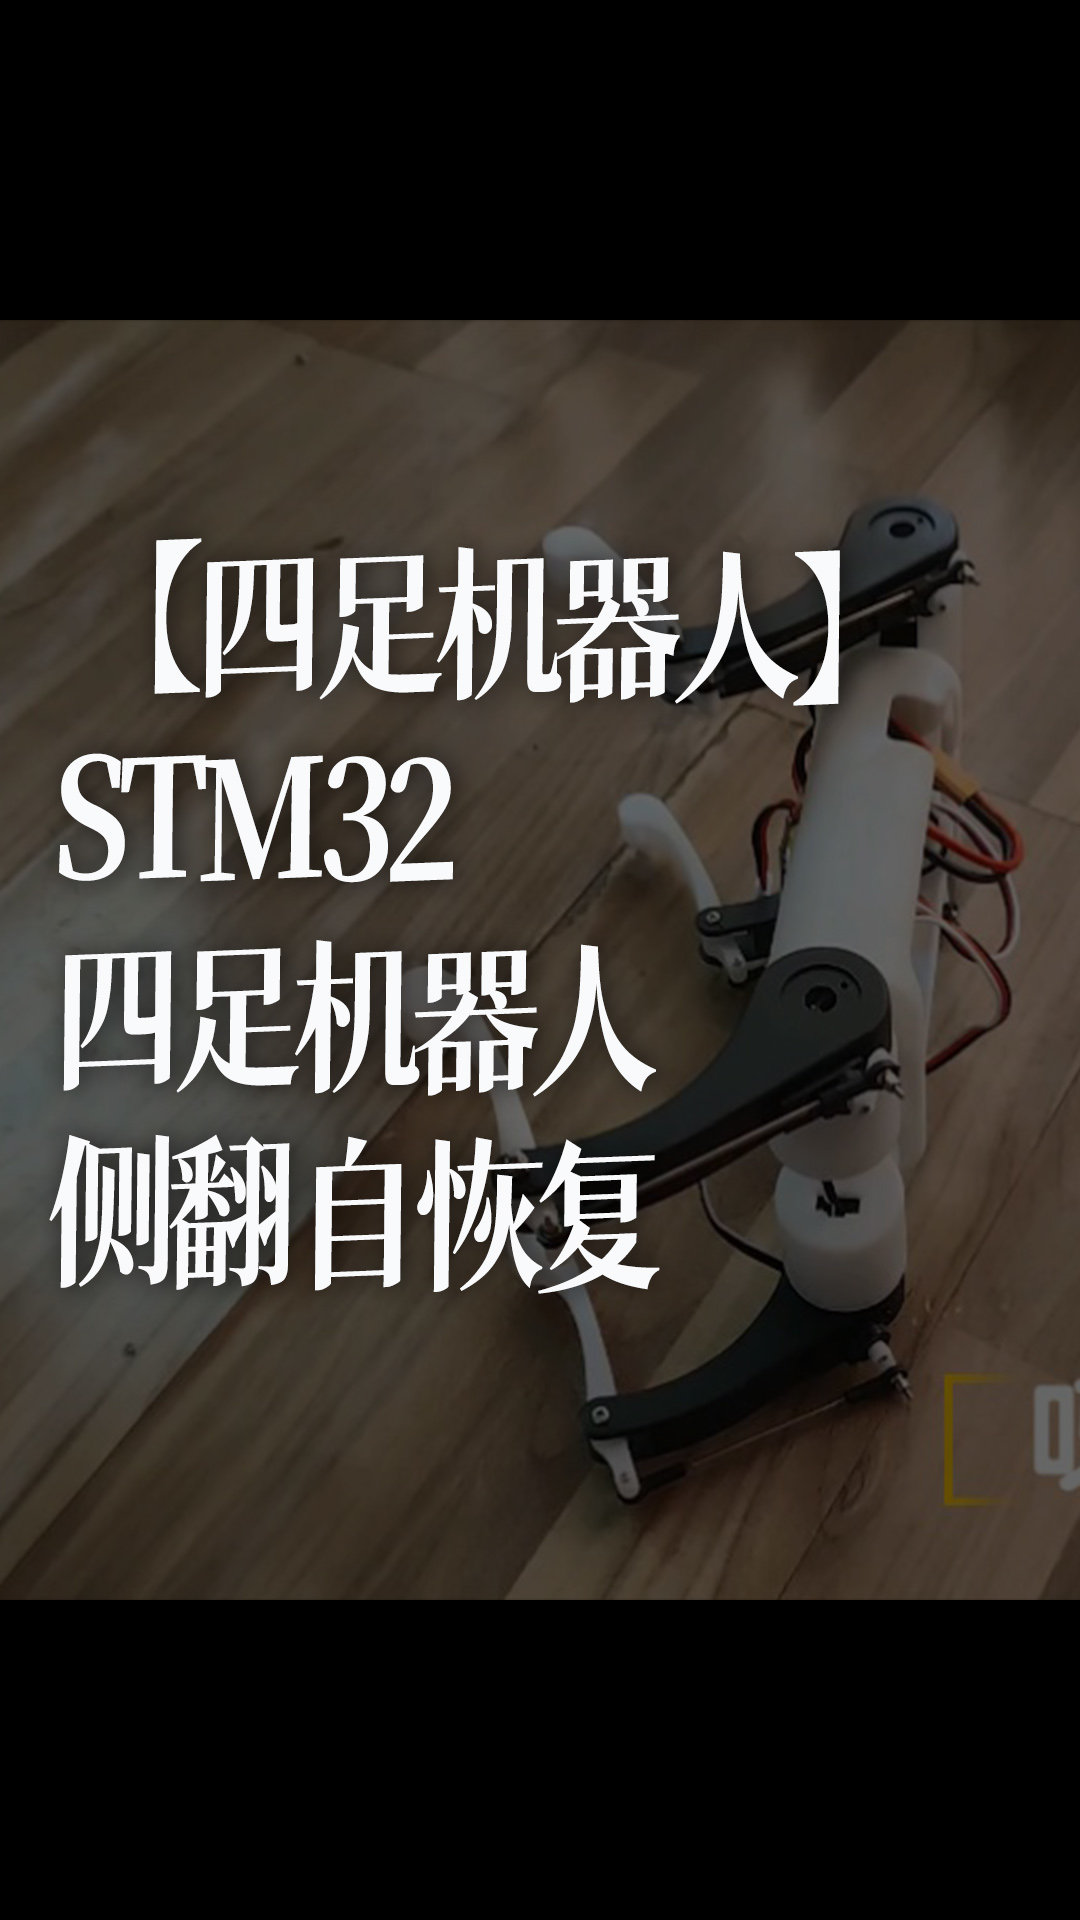 STM32四足机器人侧翻自恢复#跟着UP主一起创作吧 #造物大赏 